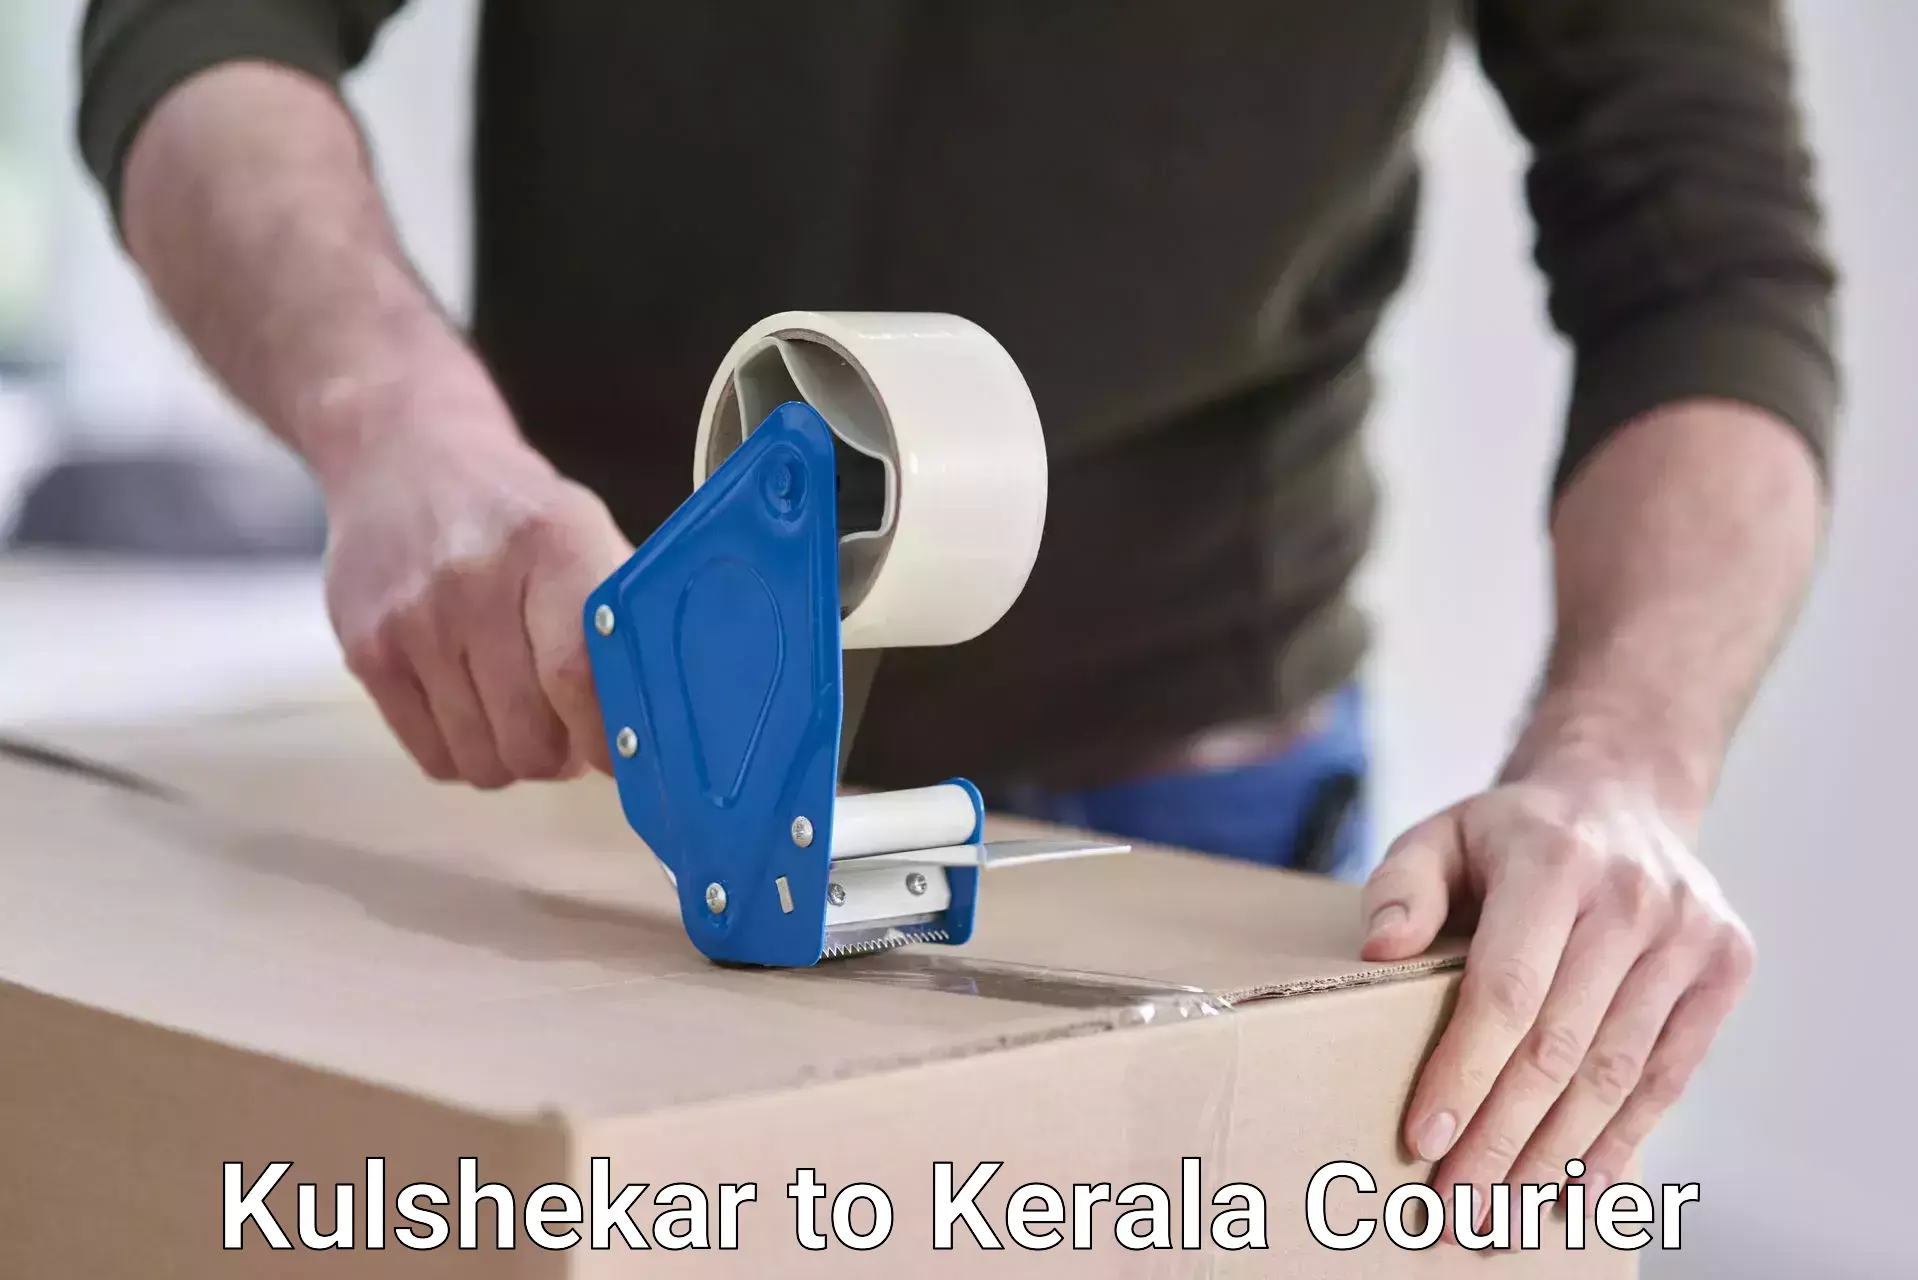 Advanced courier platforms Kulshekar to Kerala